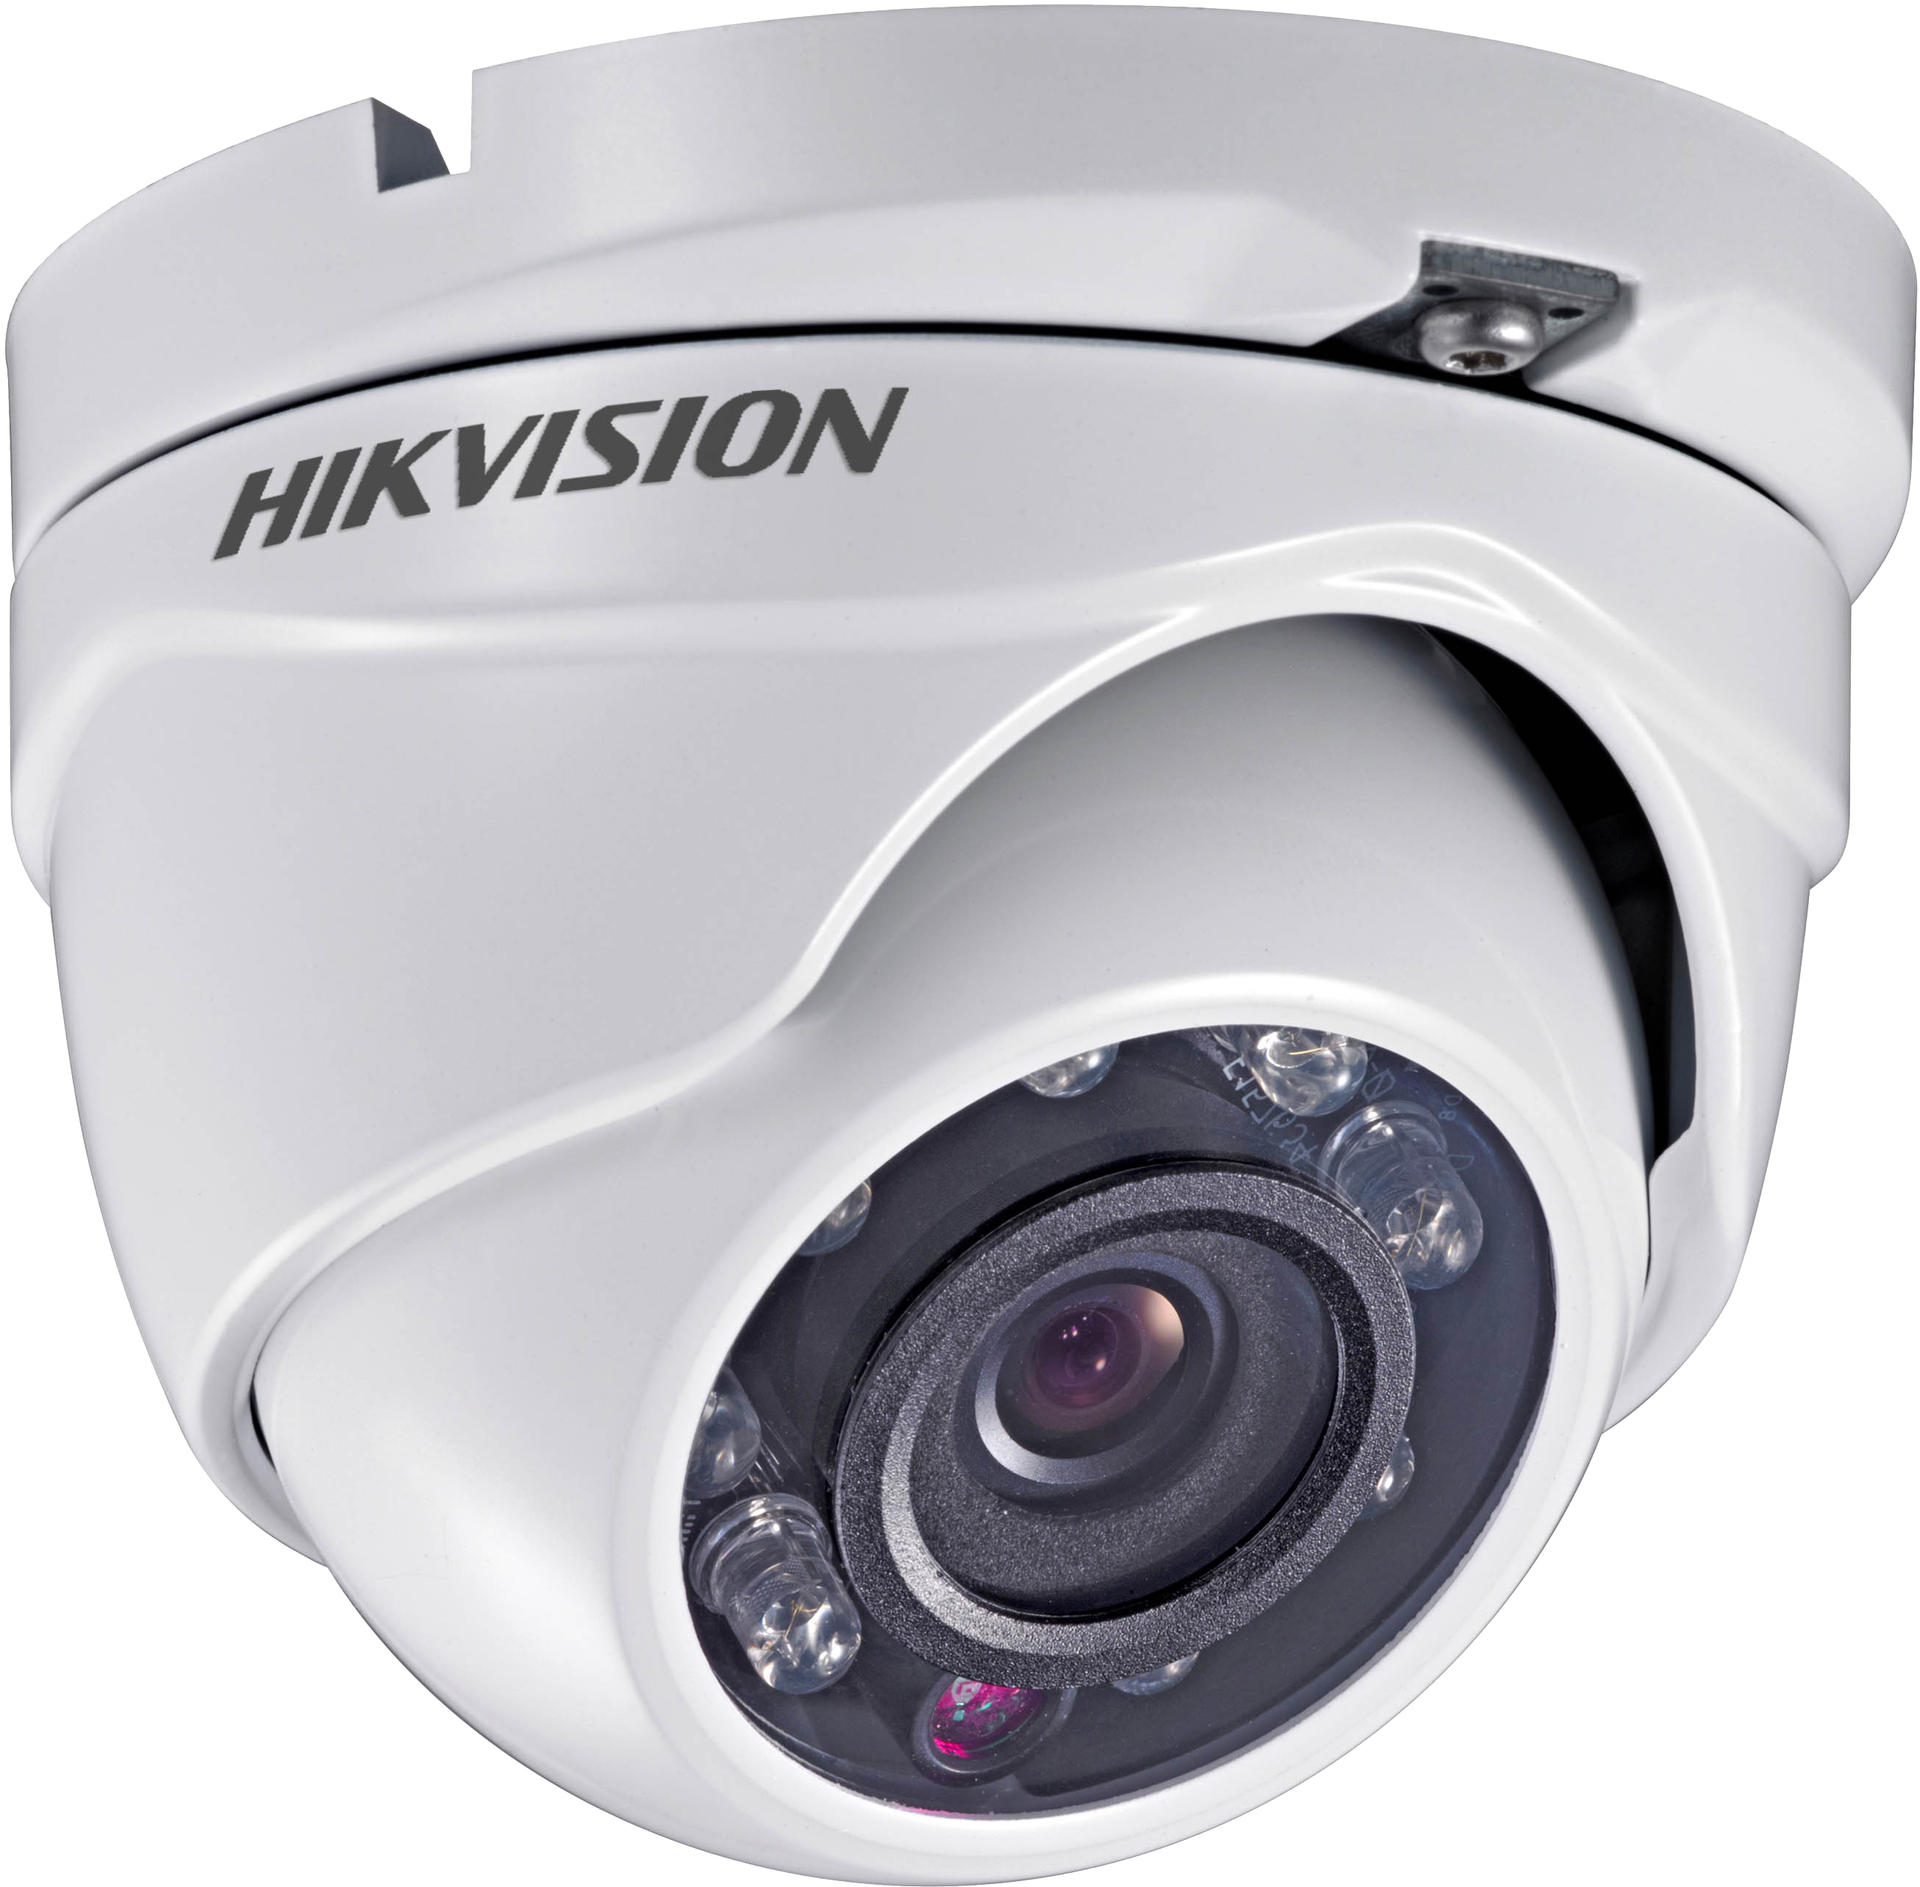 hikvision tvi camera